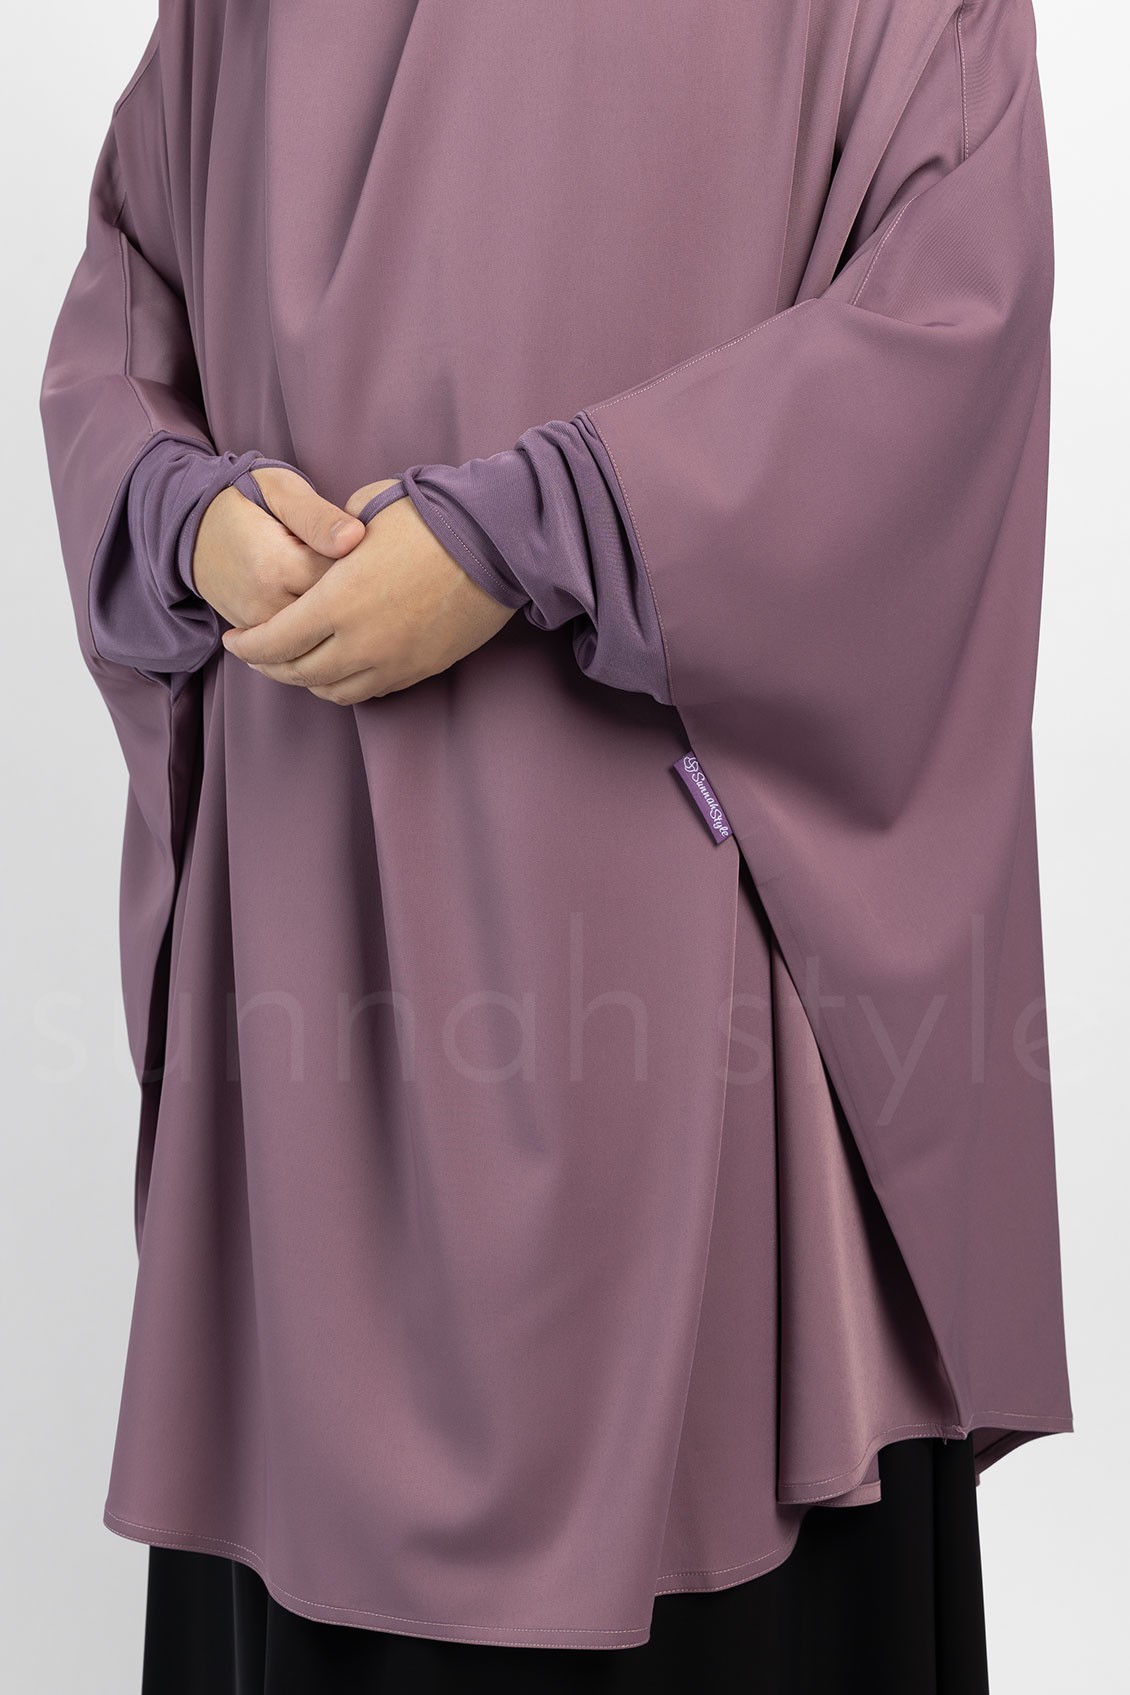 Sunnah Style Signature Jilbab Top Knee Length Mauve